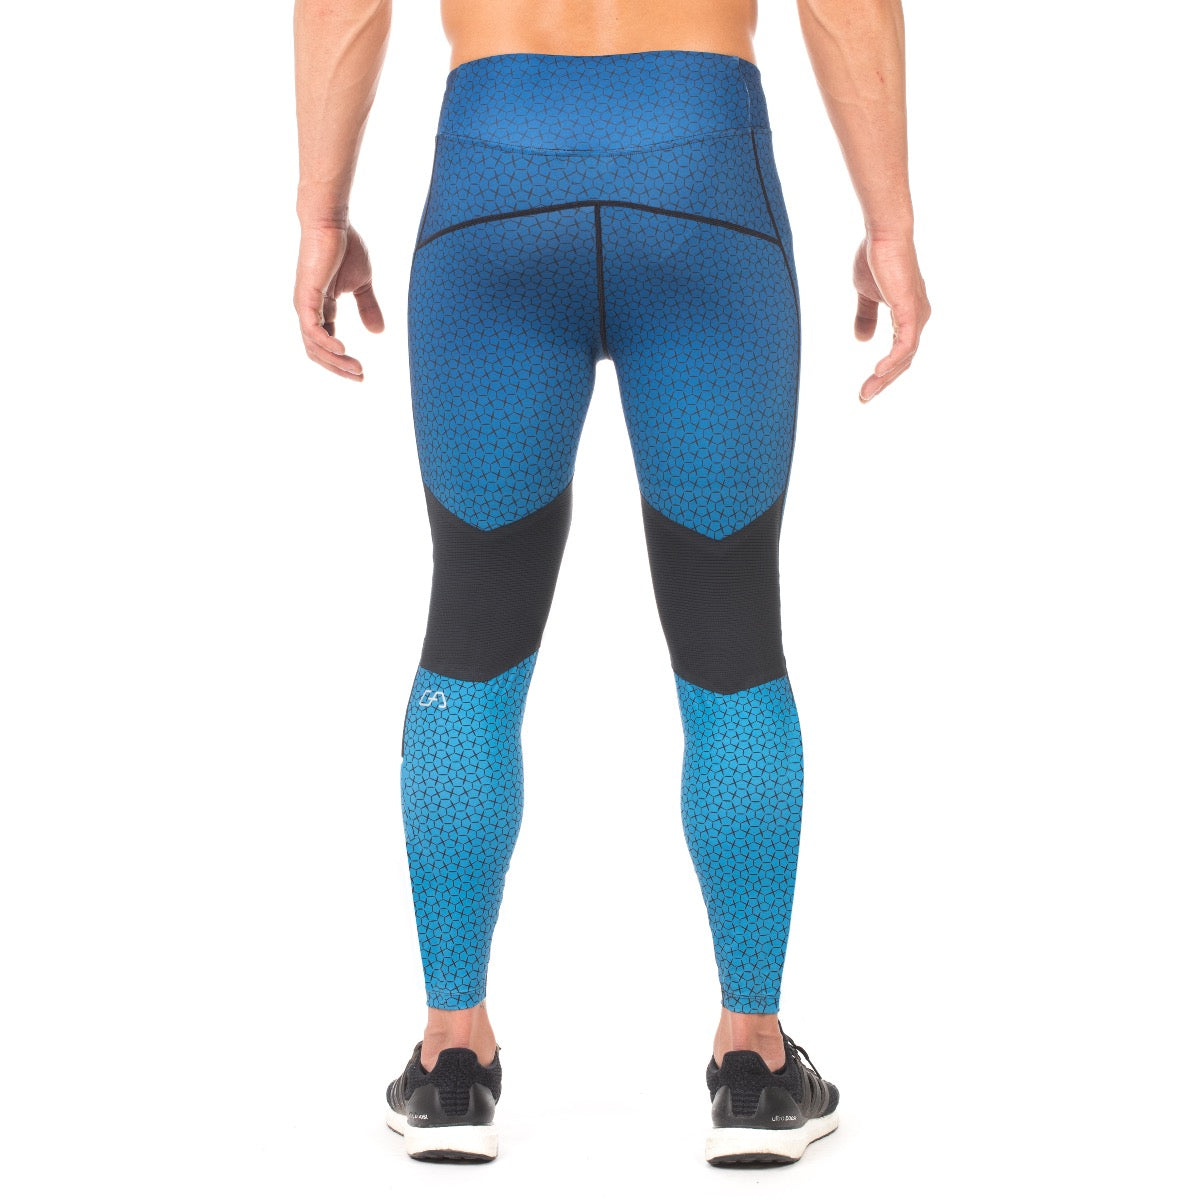 magnetron Atletisch in de rij gaan staan Workout leggings Force for men | Gym Aesthetics